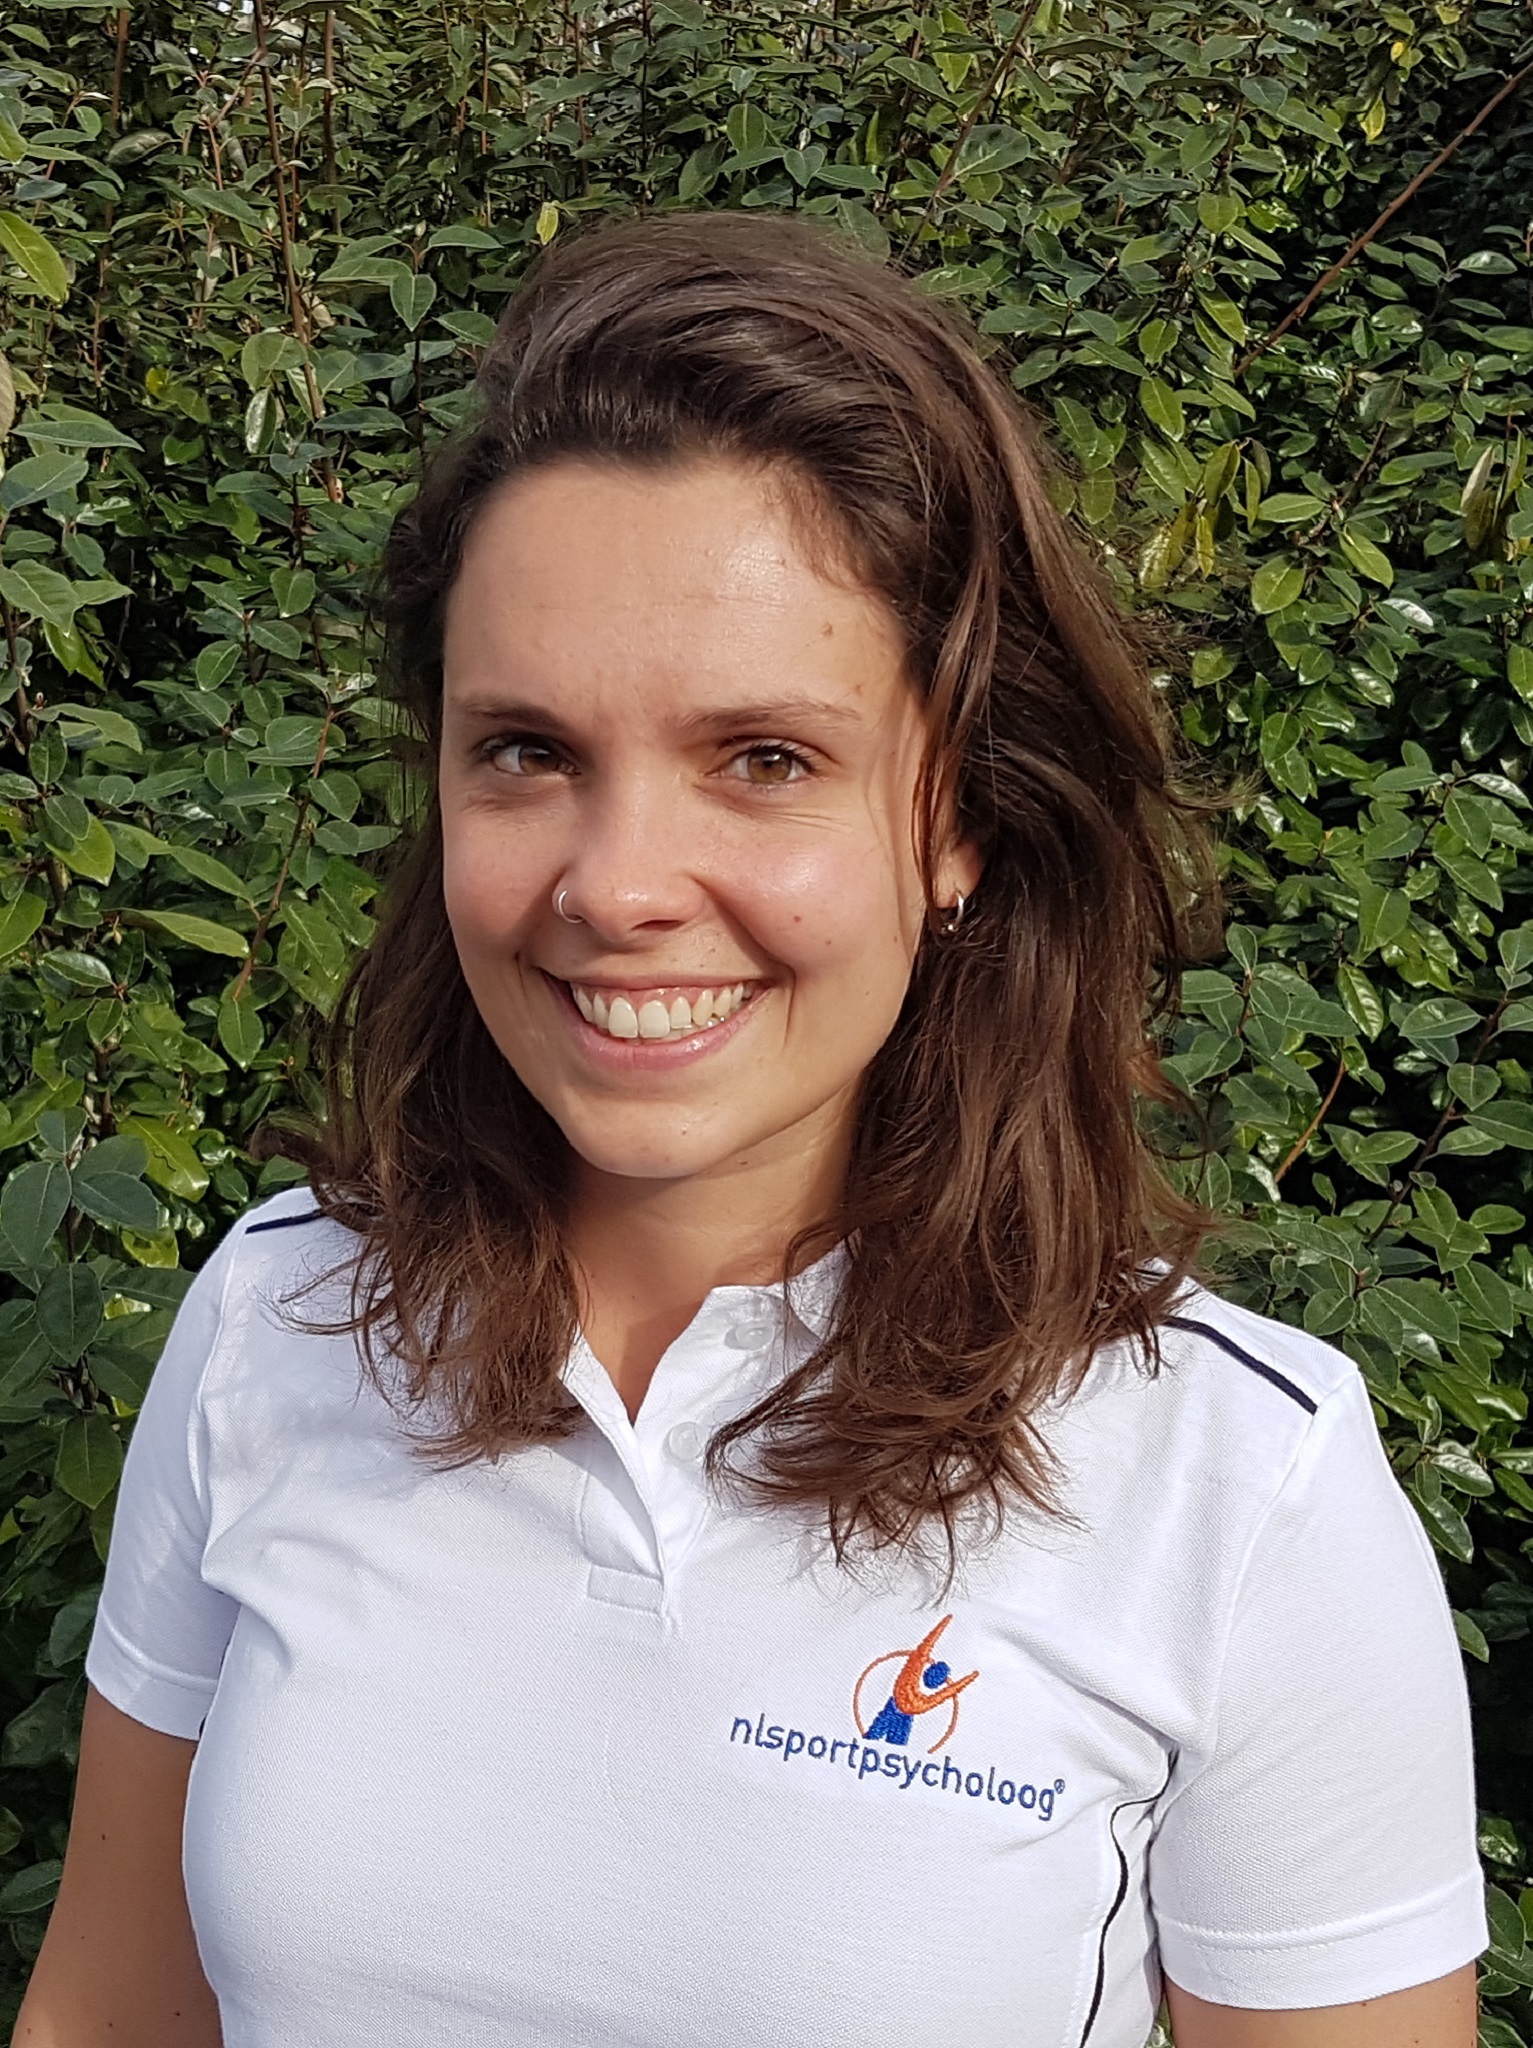 NL sportpsycholoog Katja Cardol - Zuid Holland